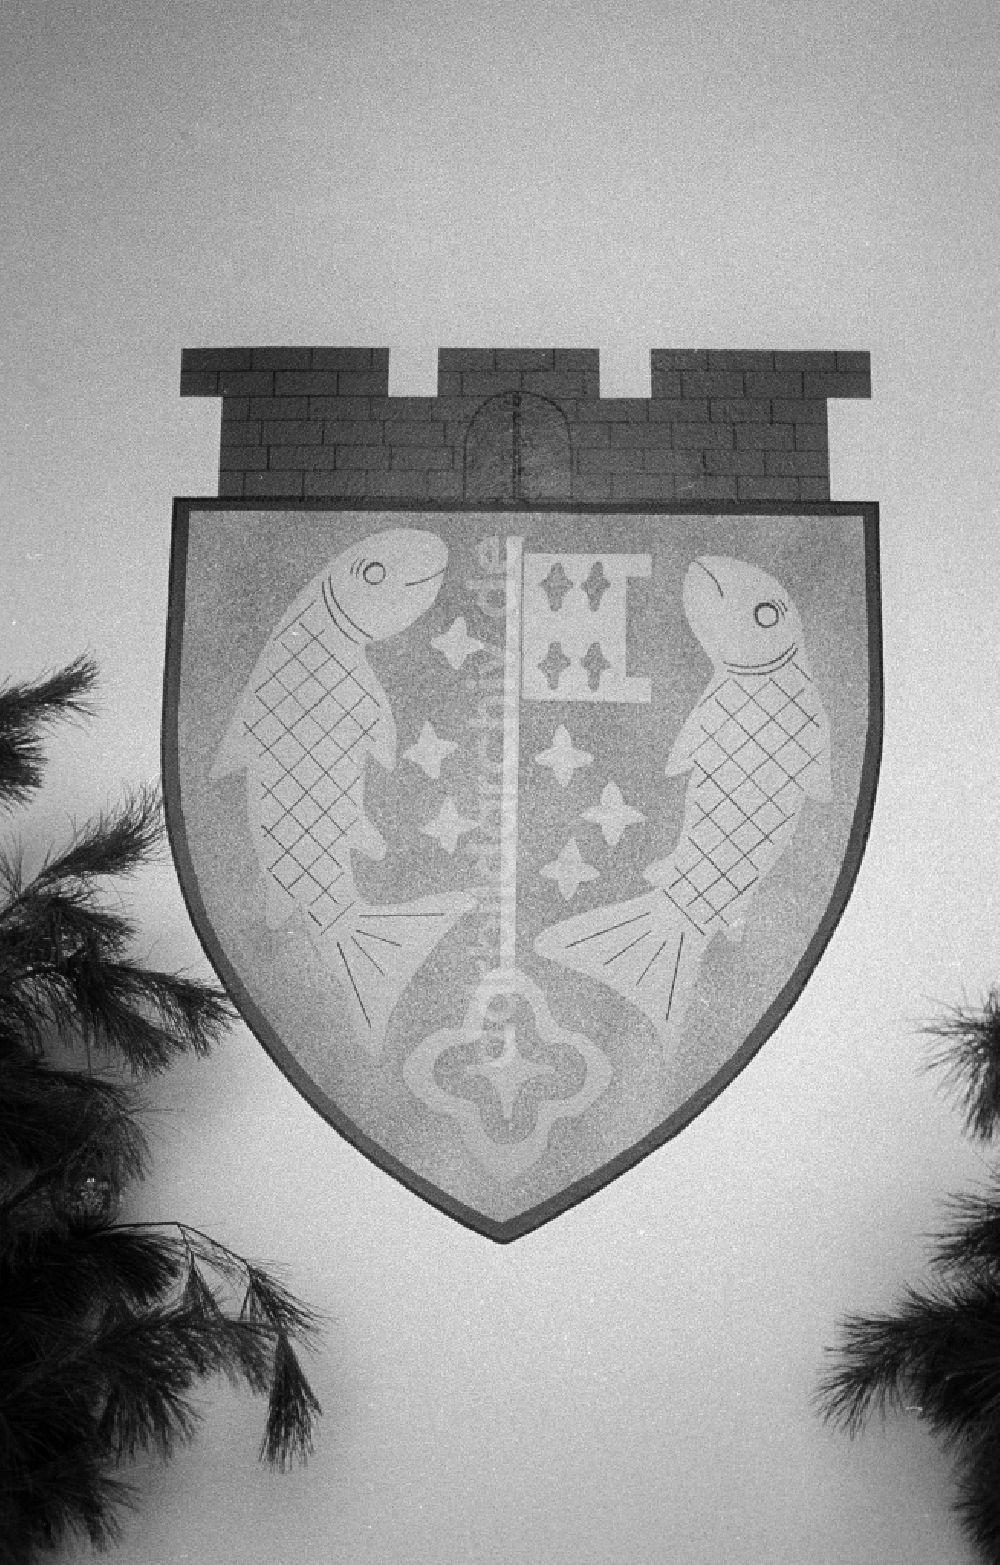 DDR-Bildarchiv: Berlin - Wappen des Bezirks Köpenick in Berlin, der ehemaligen Hauptstadt der DDR, Deutsche Demokratische Republik